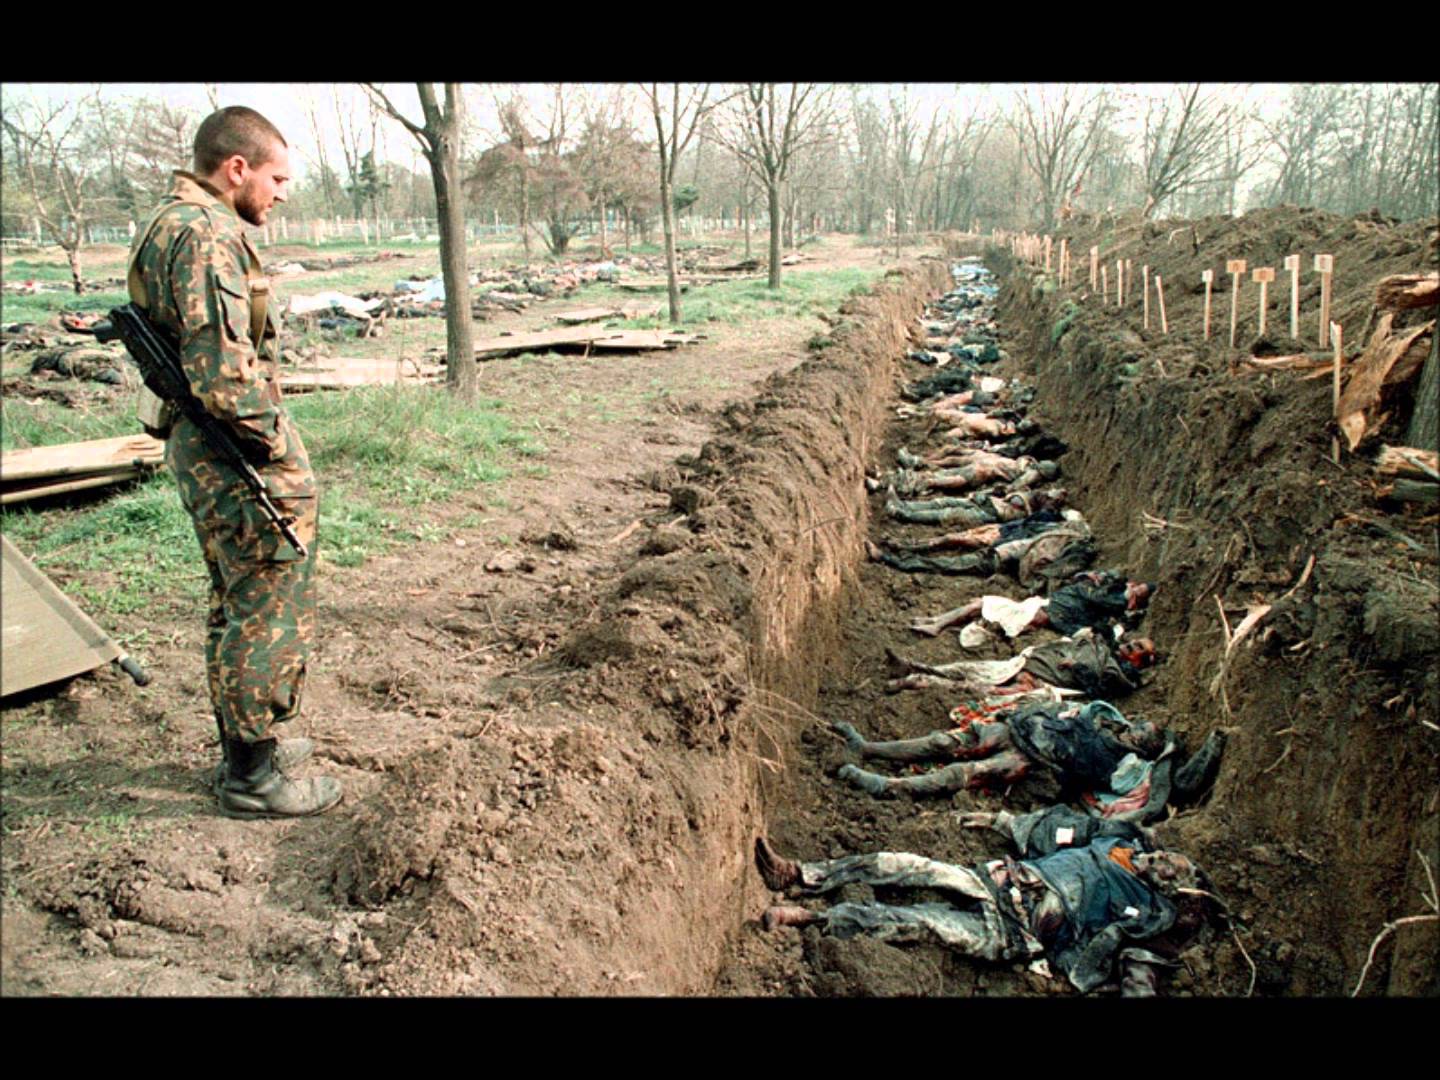 The Chechen Wars